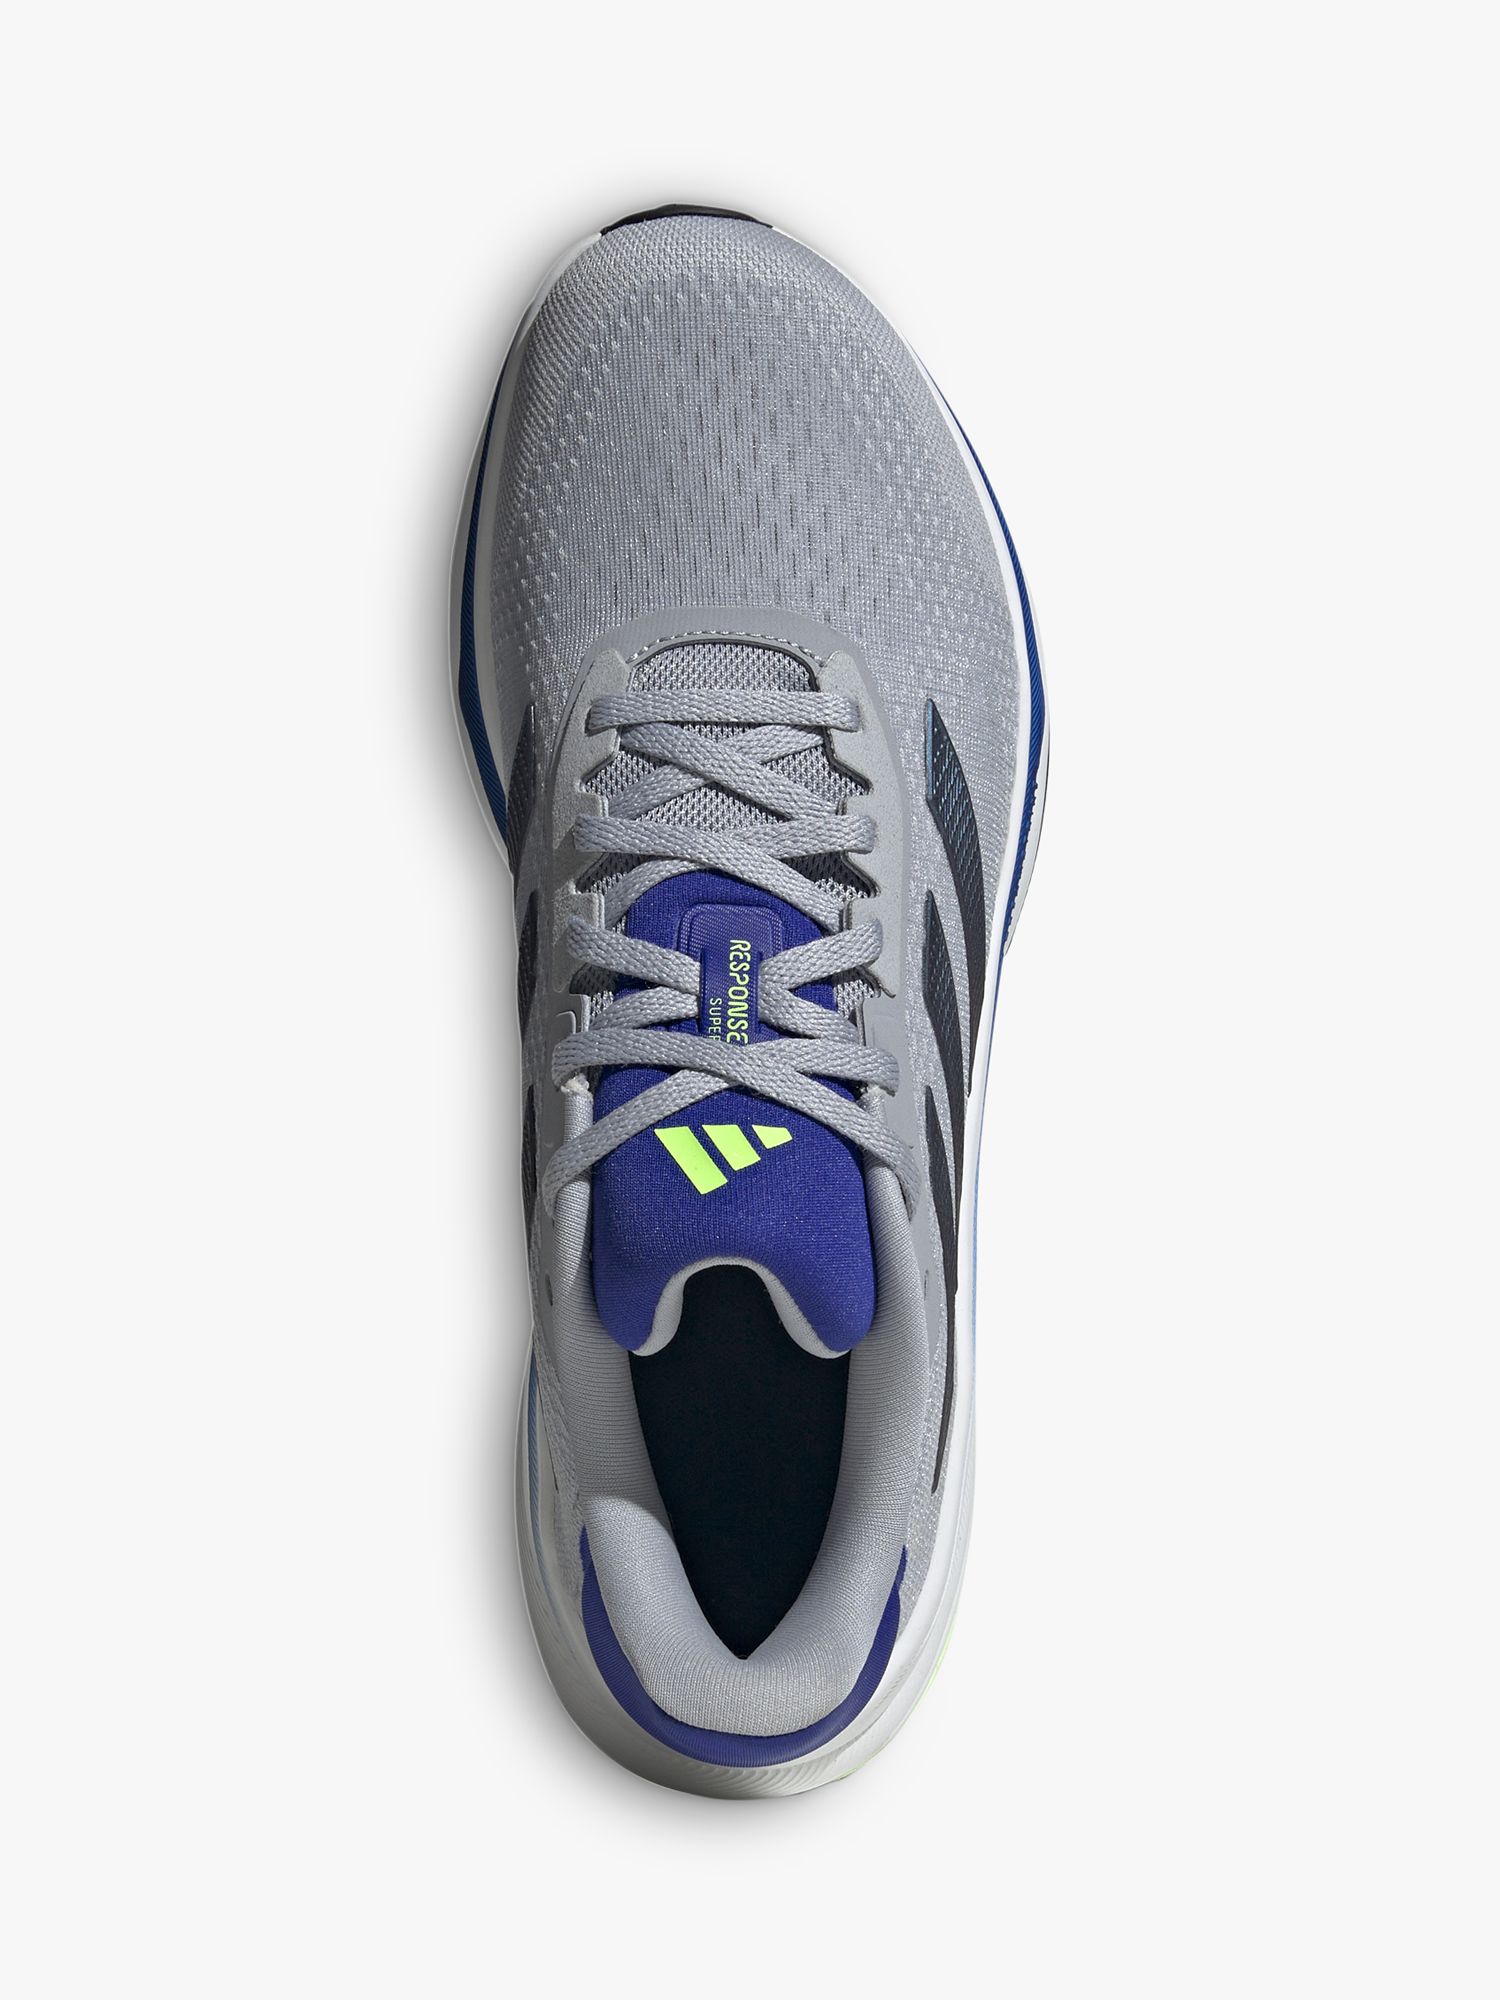 adidas Response Super Men's Running Shoes, Silver/Green, 8.5